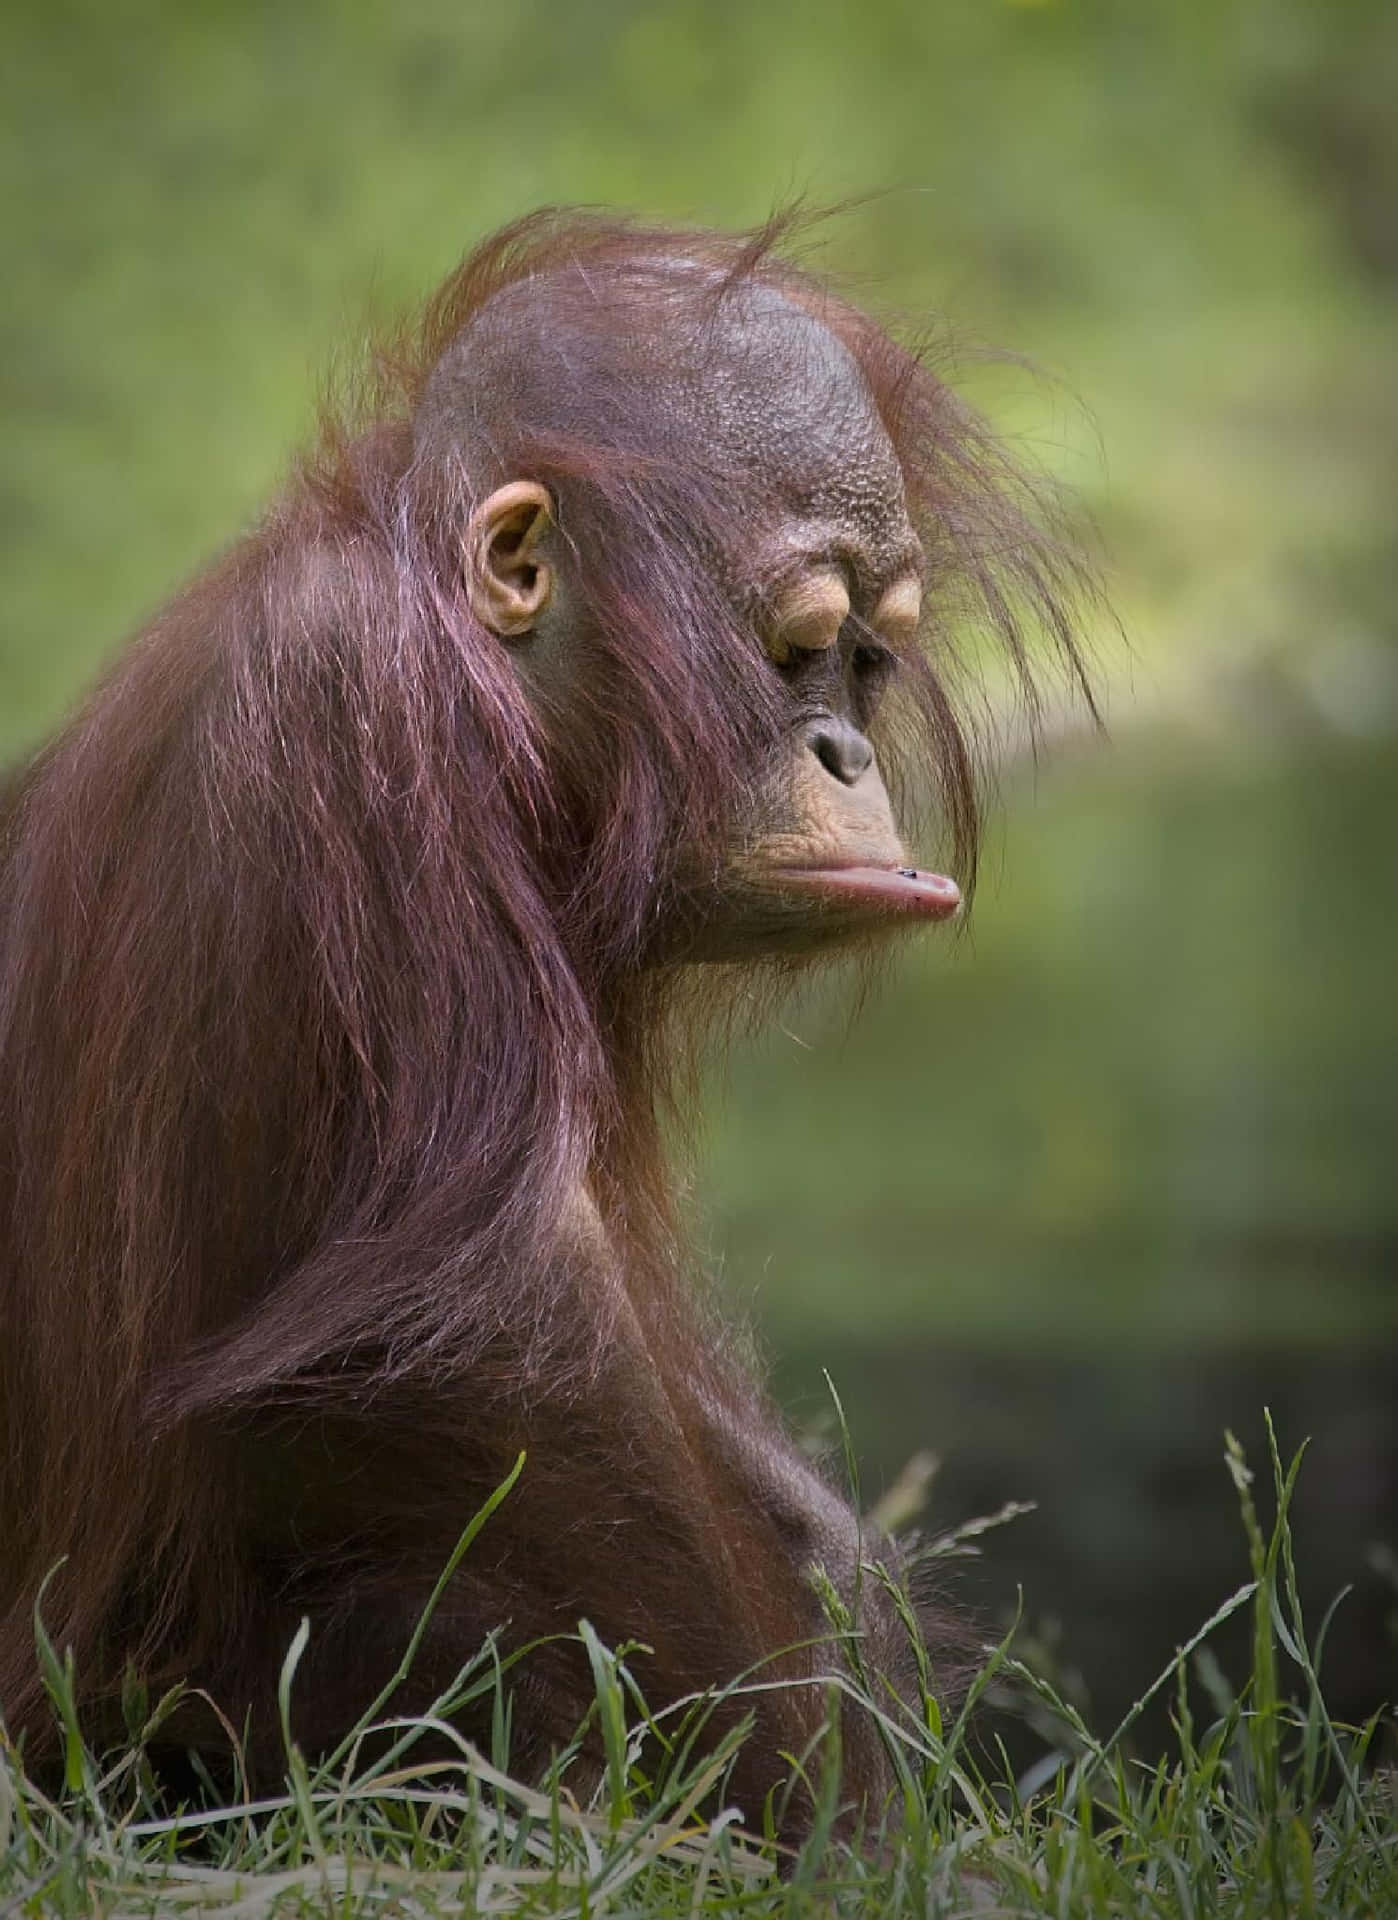 An Orangutan Is Sitting In The Grass